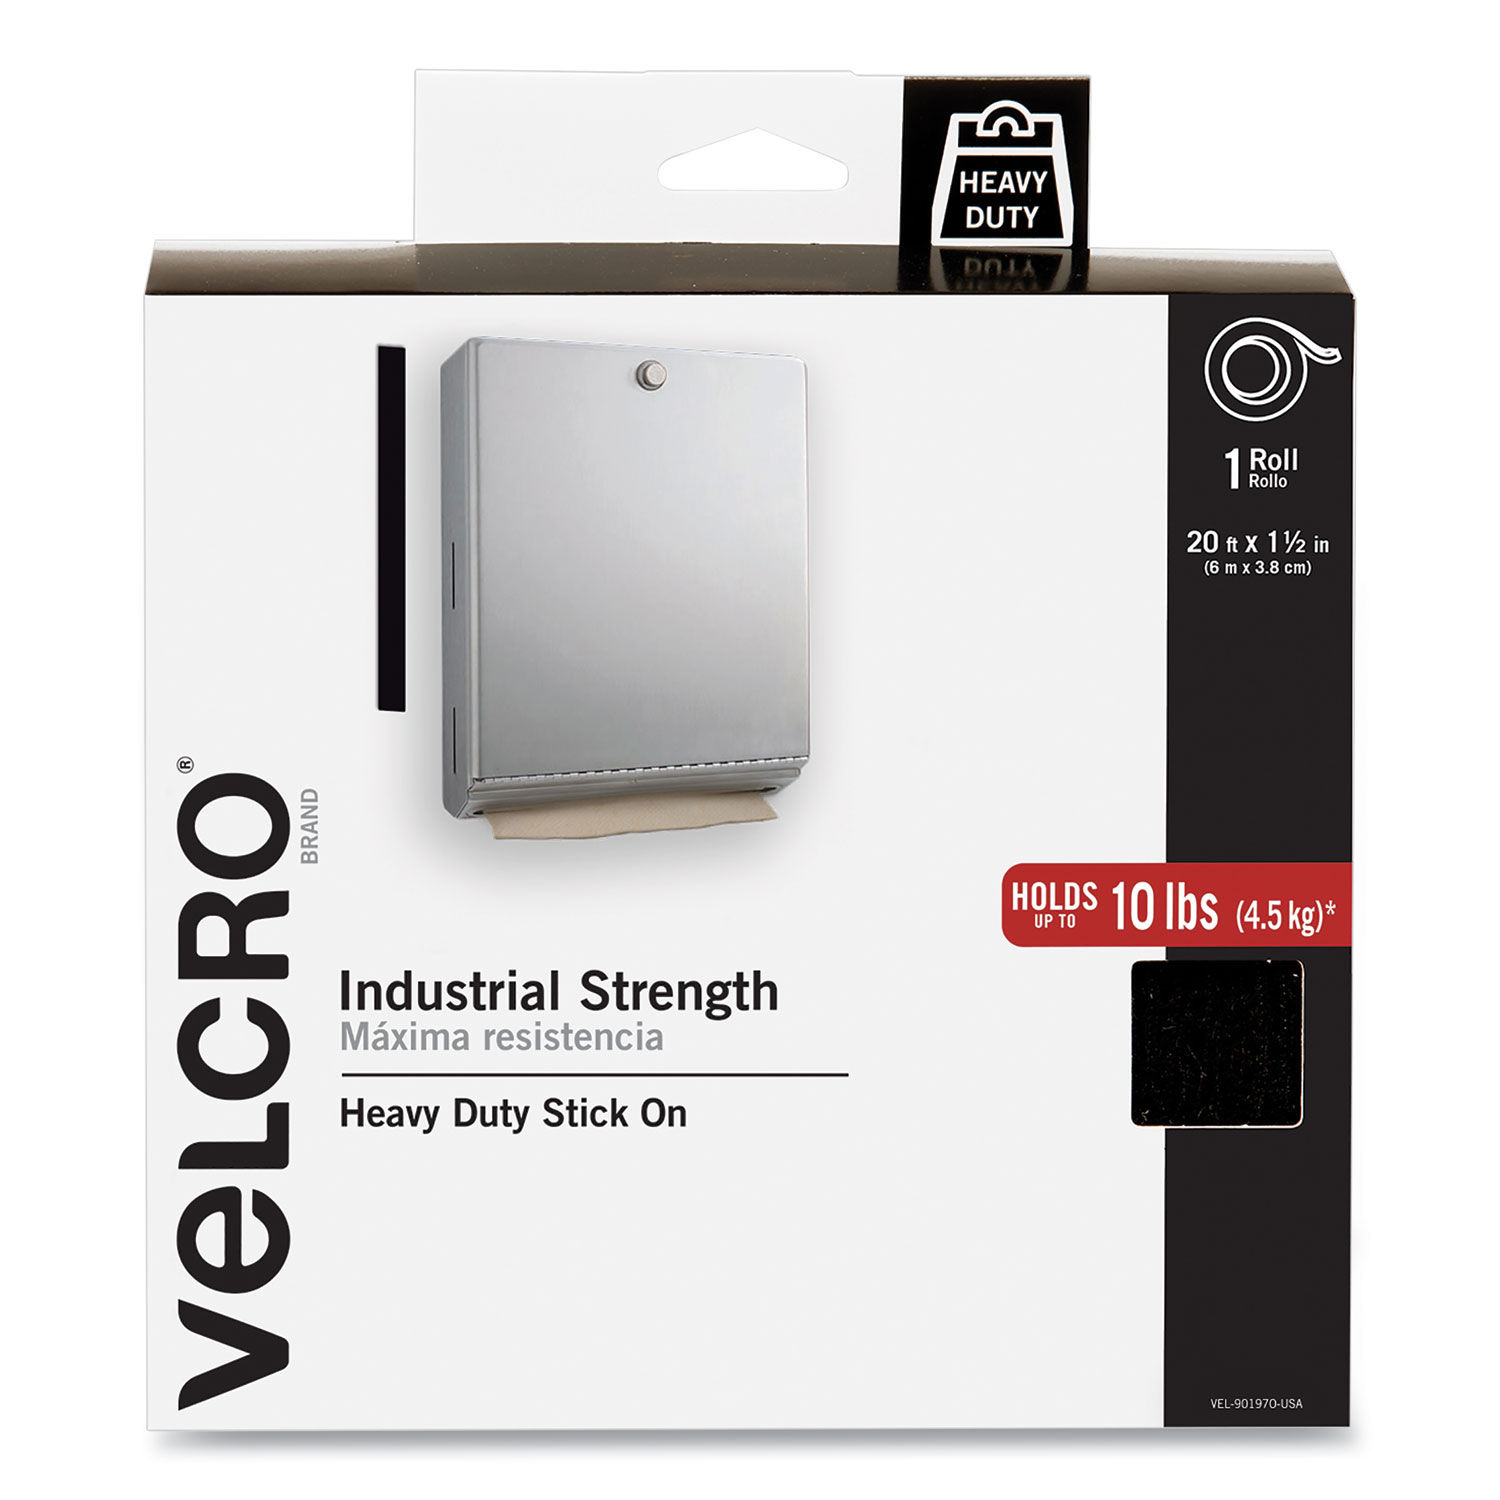 Industrial-Strength Heavy-Duty Fasteners with Dispenser Box by VELCROandreg; Brand VEK90197